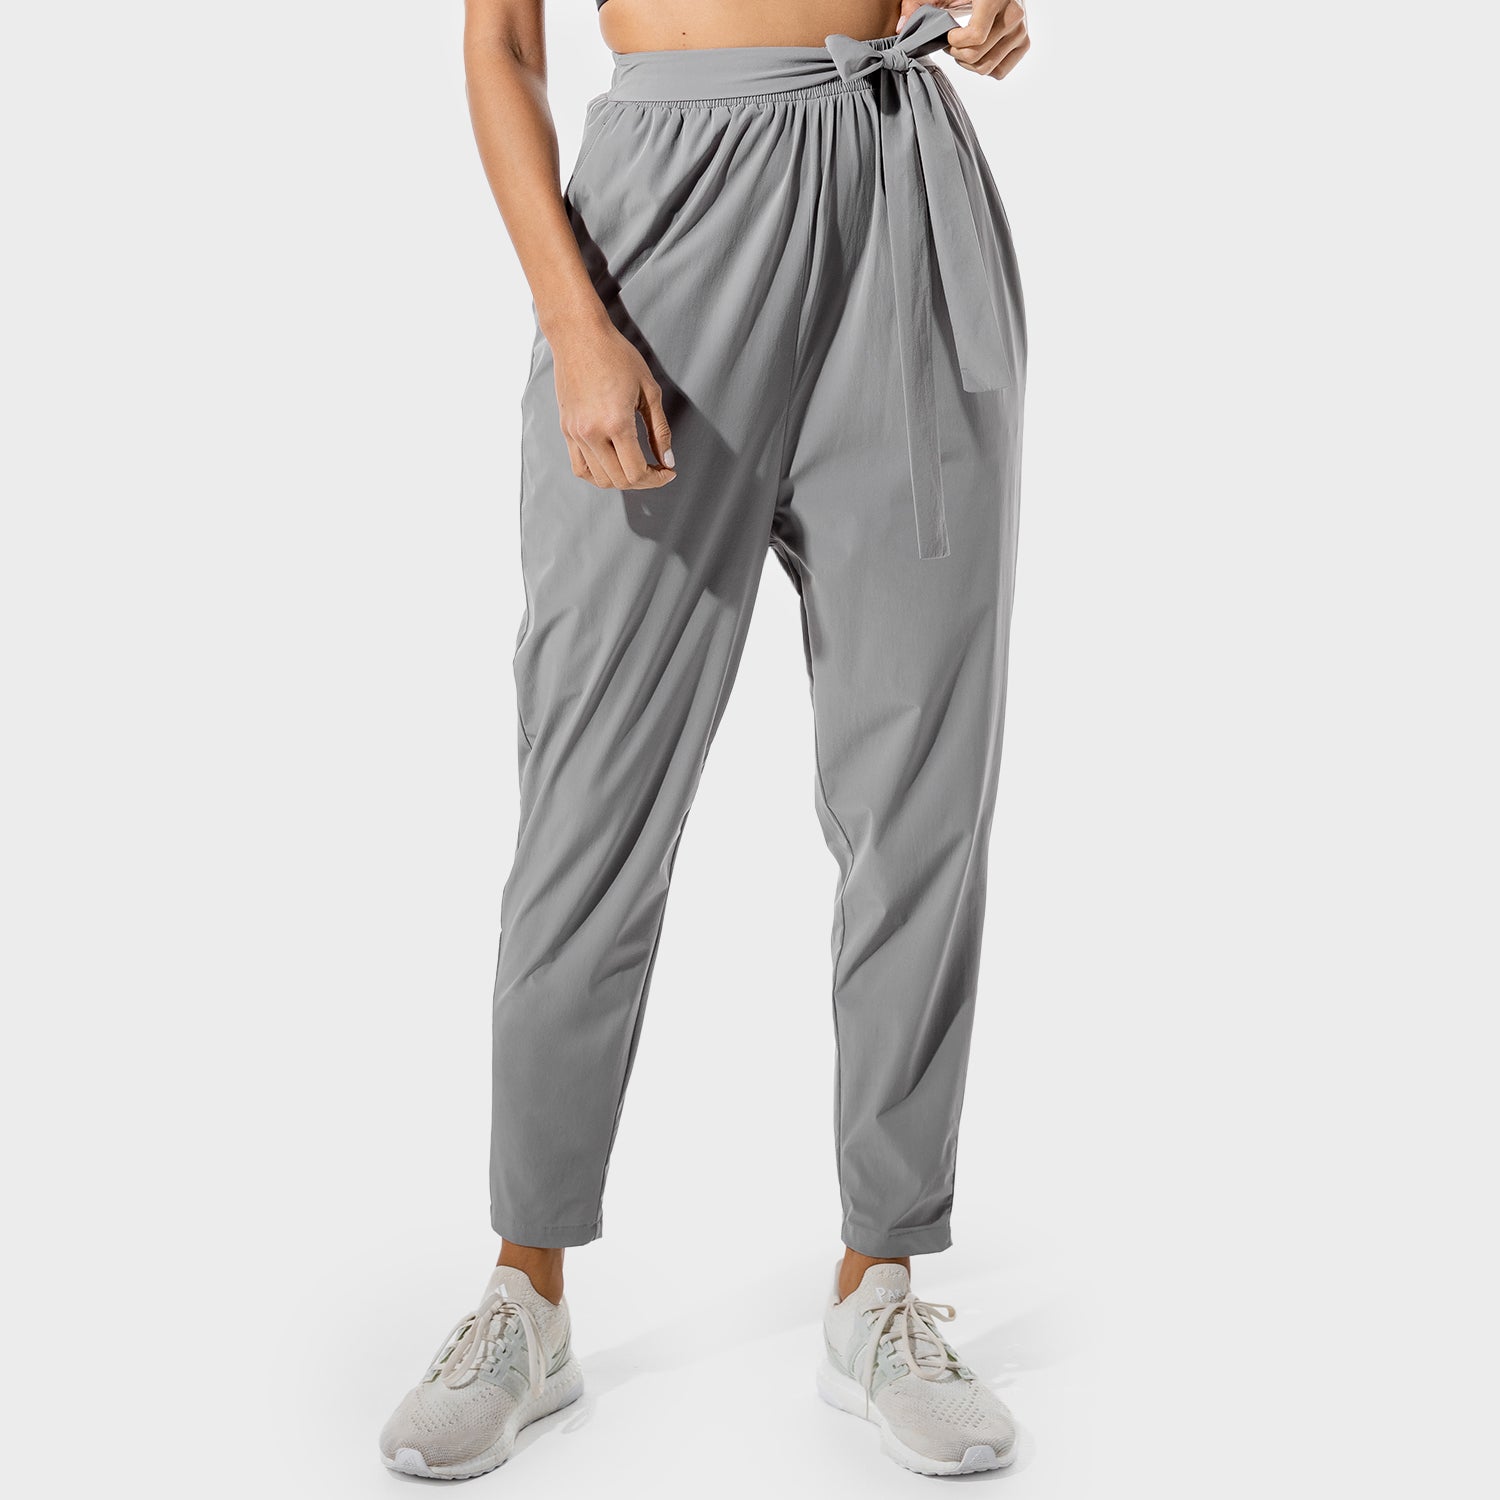 squatwolf-gym-wear-womens-fitness-wide-leg-pants-grey-workout-pants